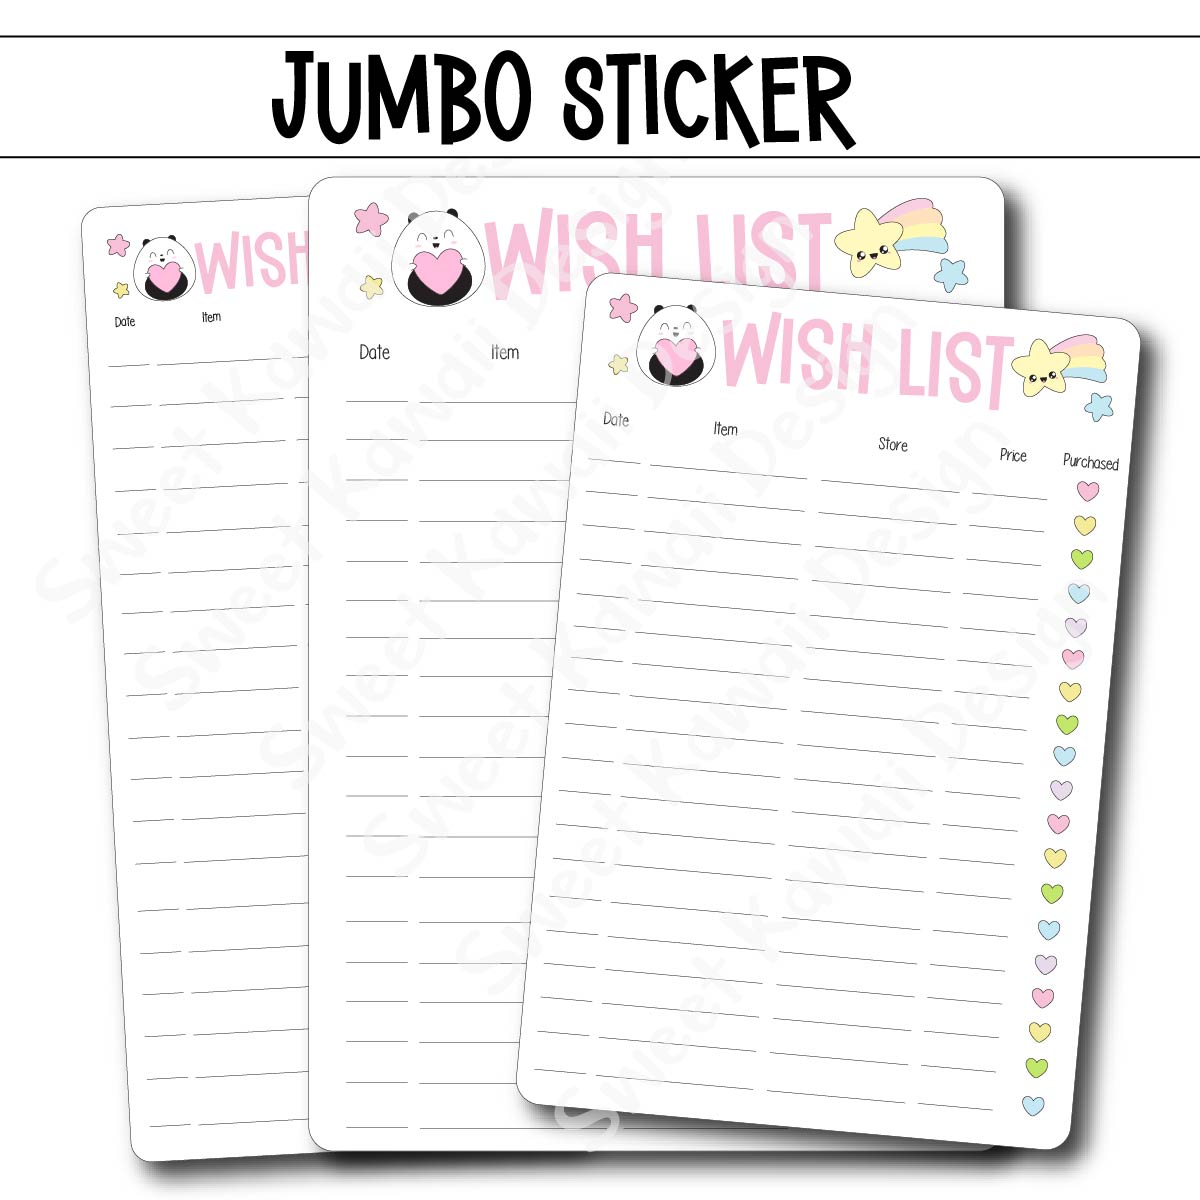 Kawaii Jumbo Sticker - Wish List - Size Options Available